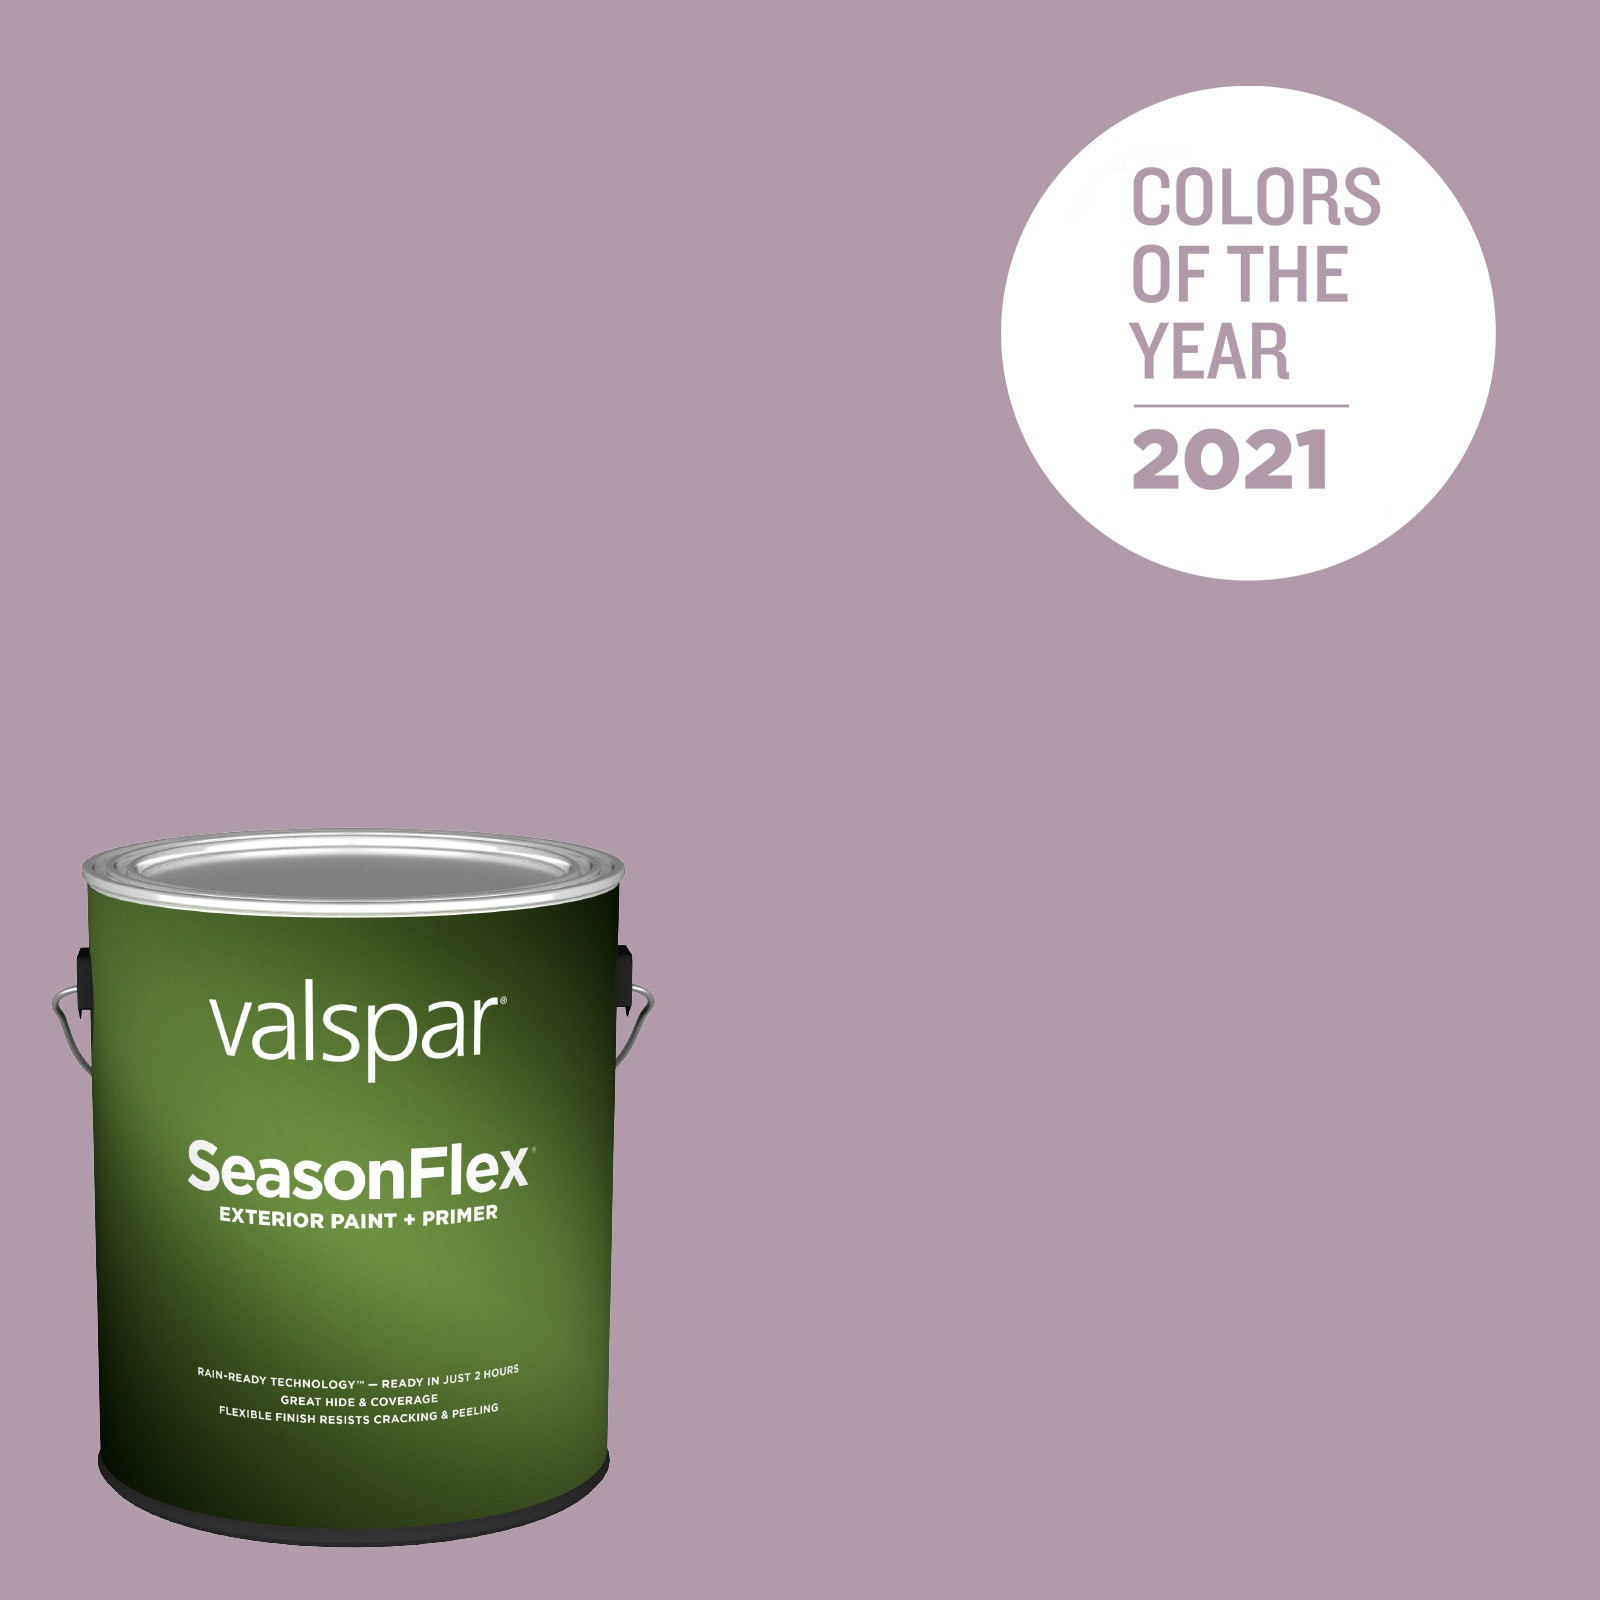 Valspar Signature Satin Heirloom Red 1010-3 Interior Paint (1-Gallon) at